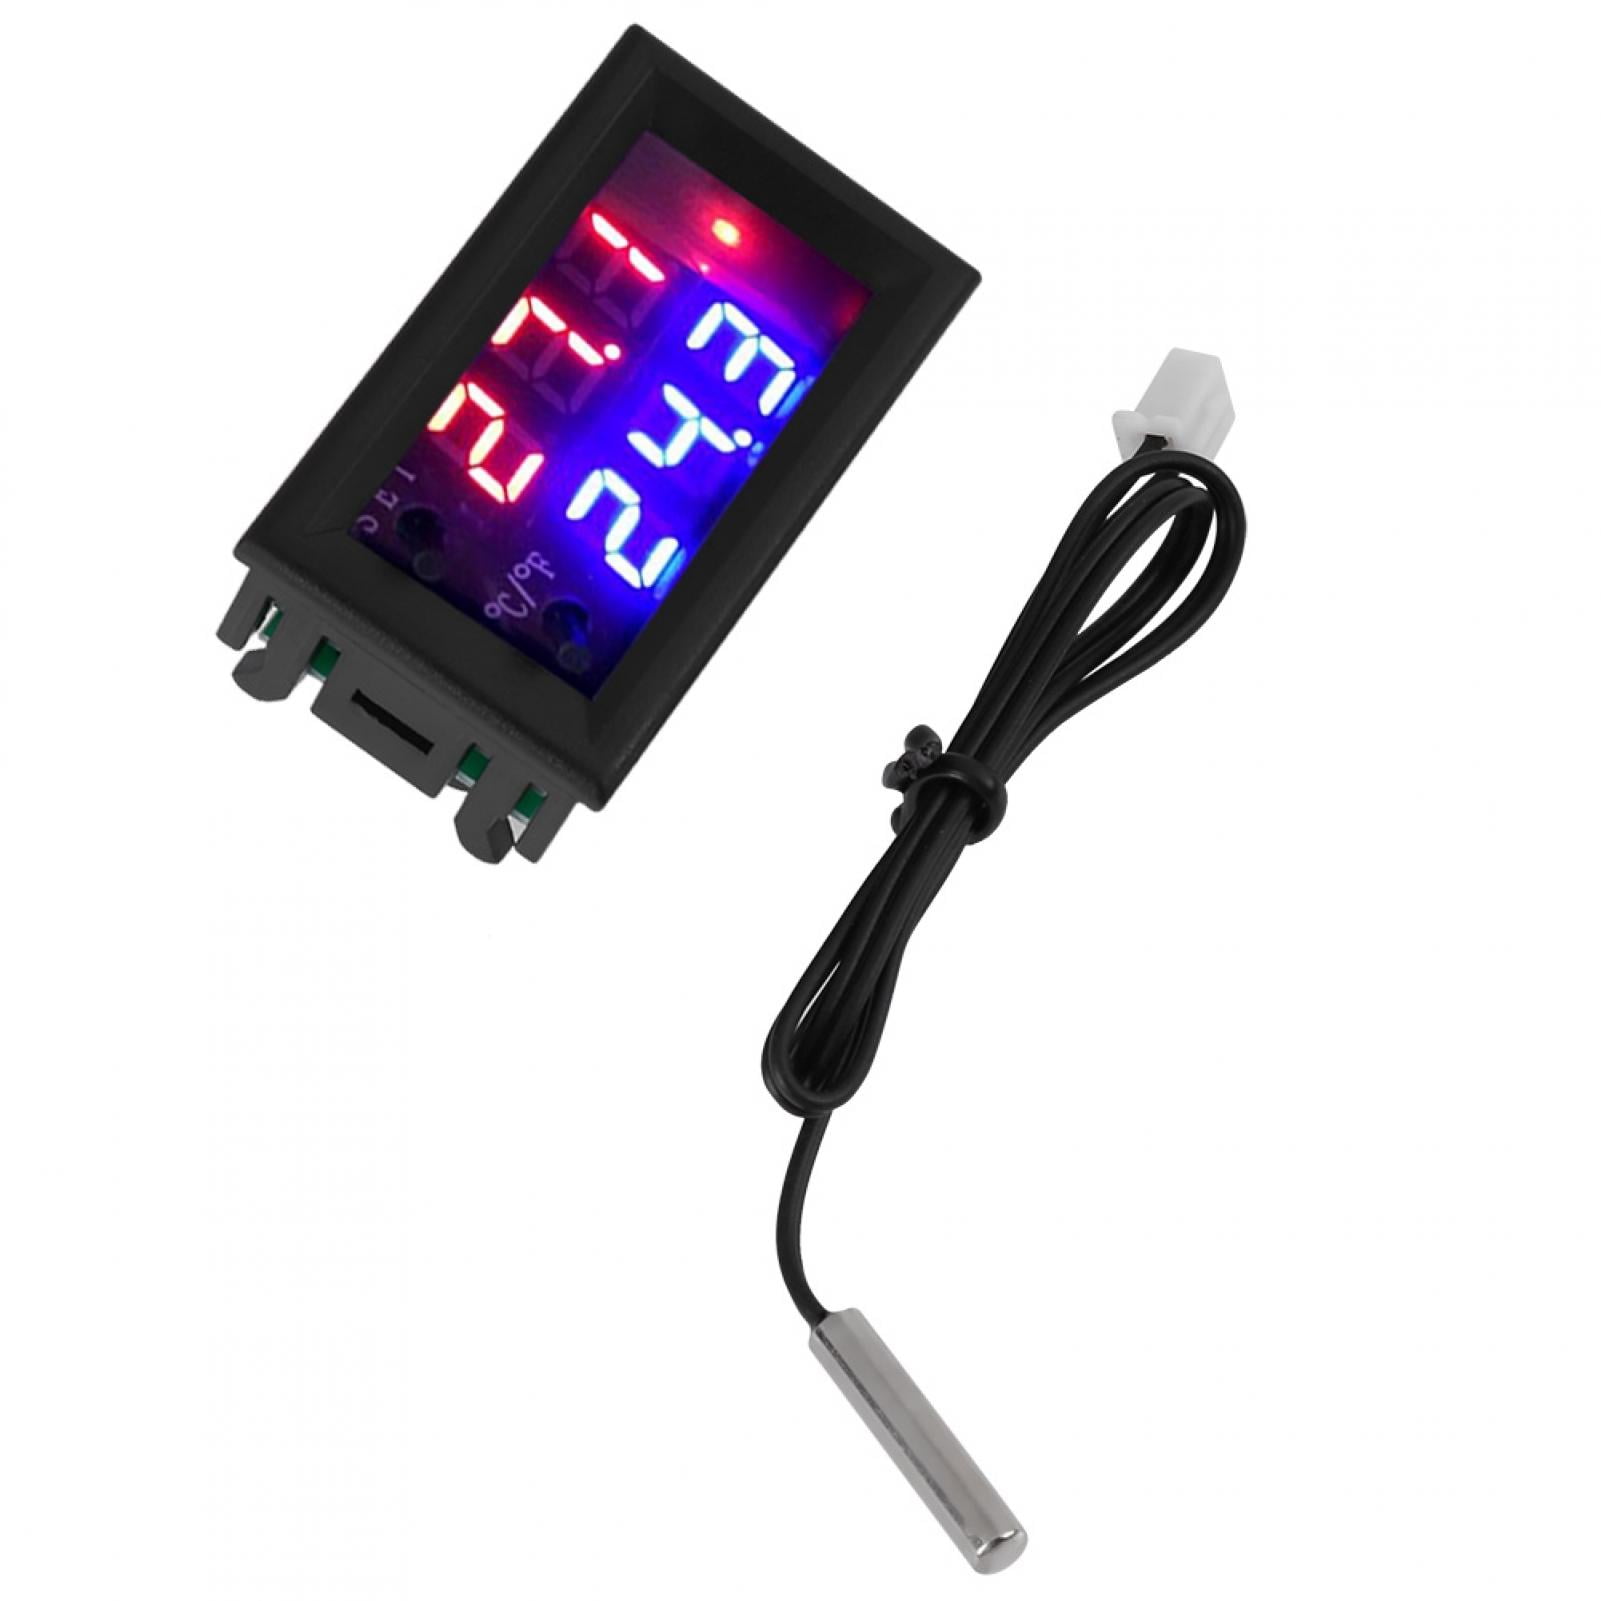 24V Temperature Controller DC24V Digital Display Microcomputer Thermostat Temperature Controller Switch 50℃ to 110 ℃ Temperature Measurement Range with Sensor 